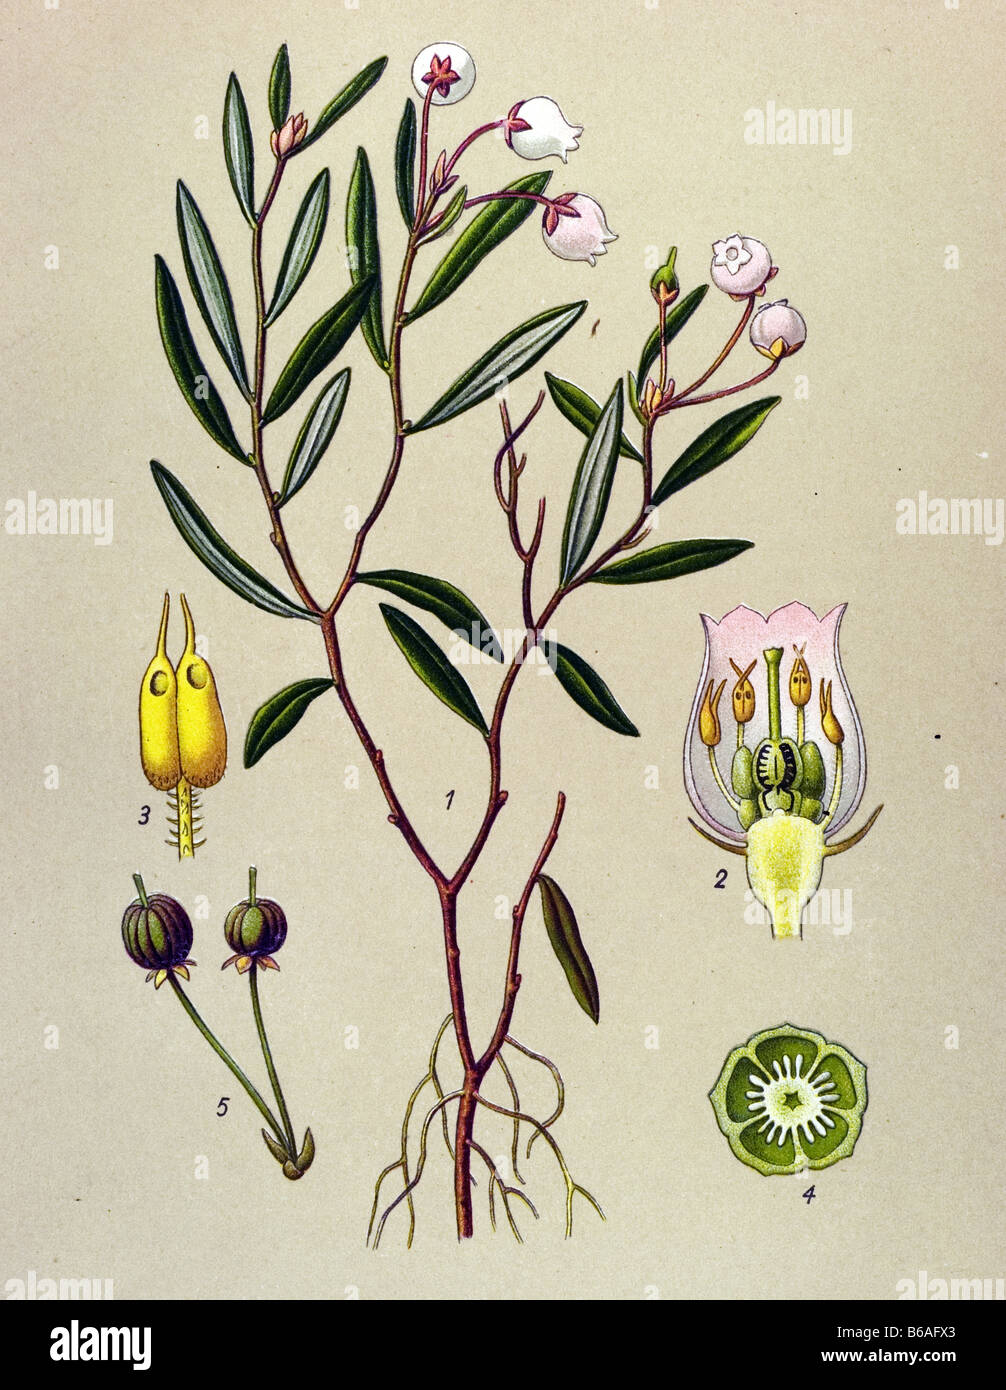 Bog-rosemary, Andromeda polifolia poisonous plants illustrations Stock Photo